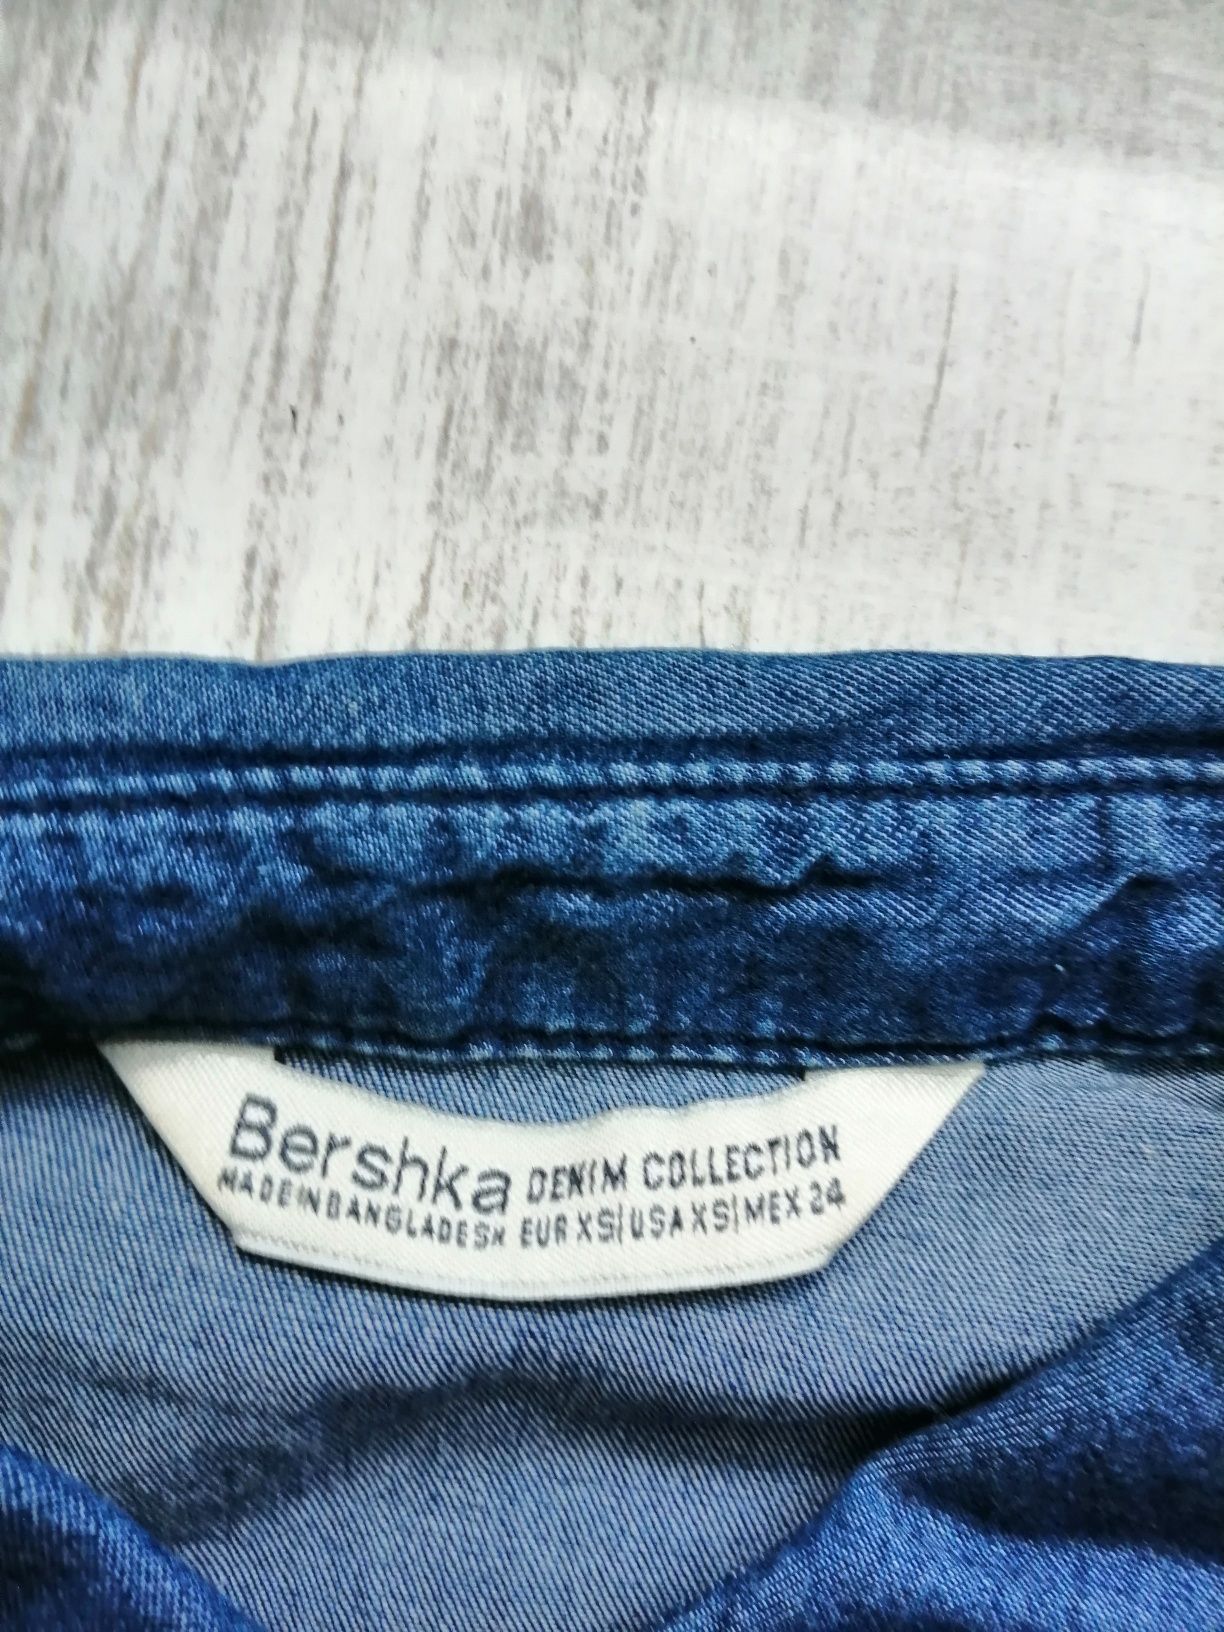 Koszyka jeansowa Bershka 36r.